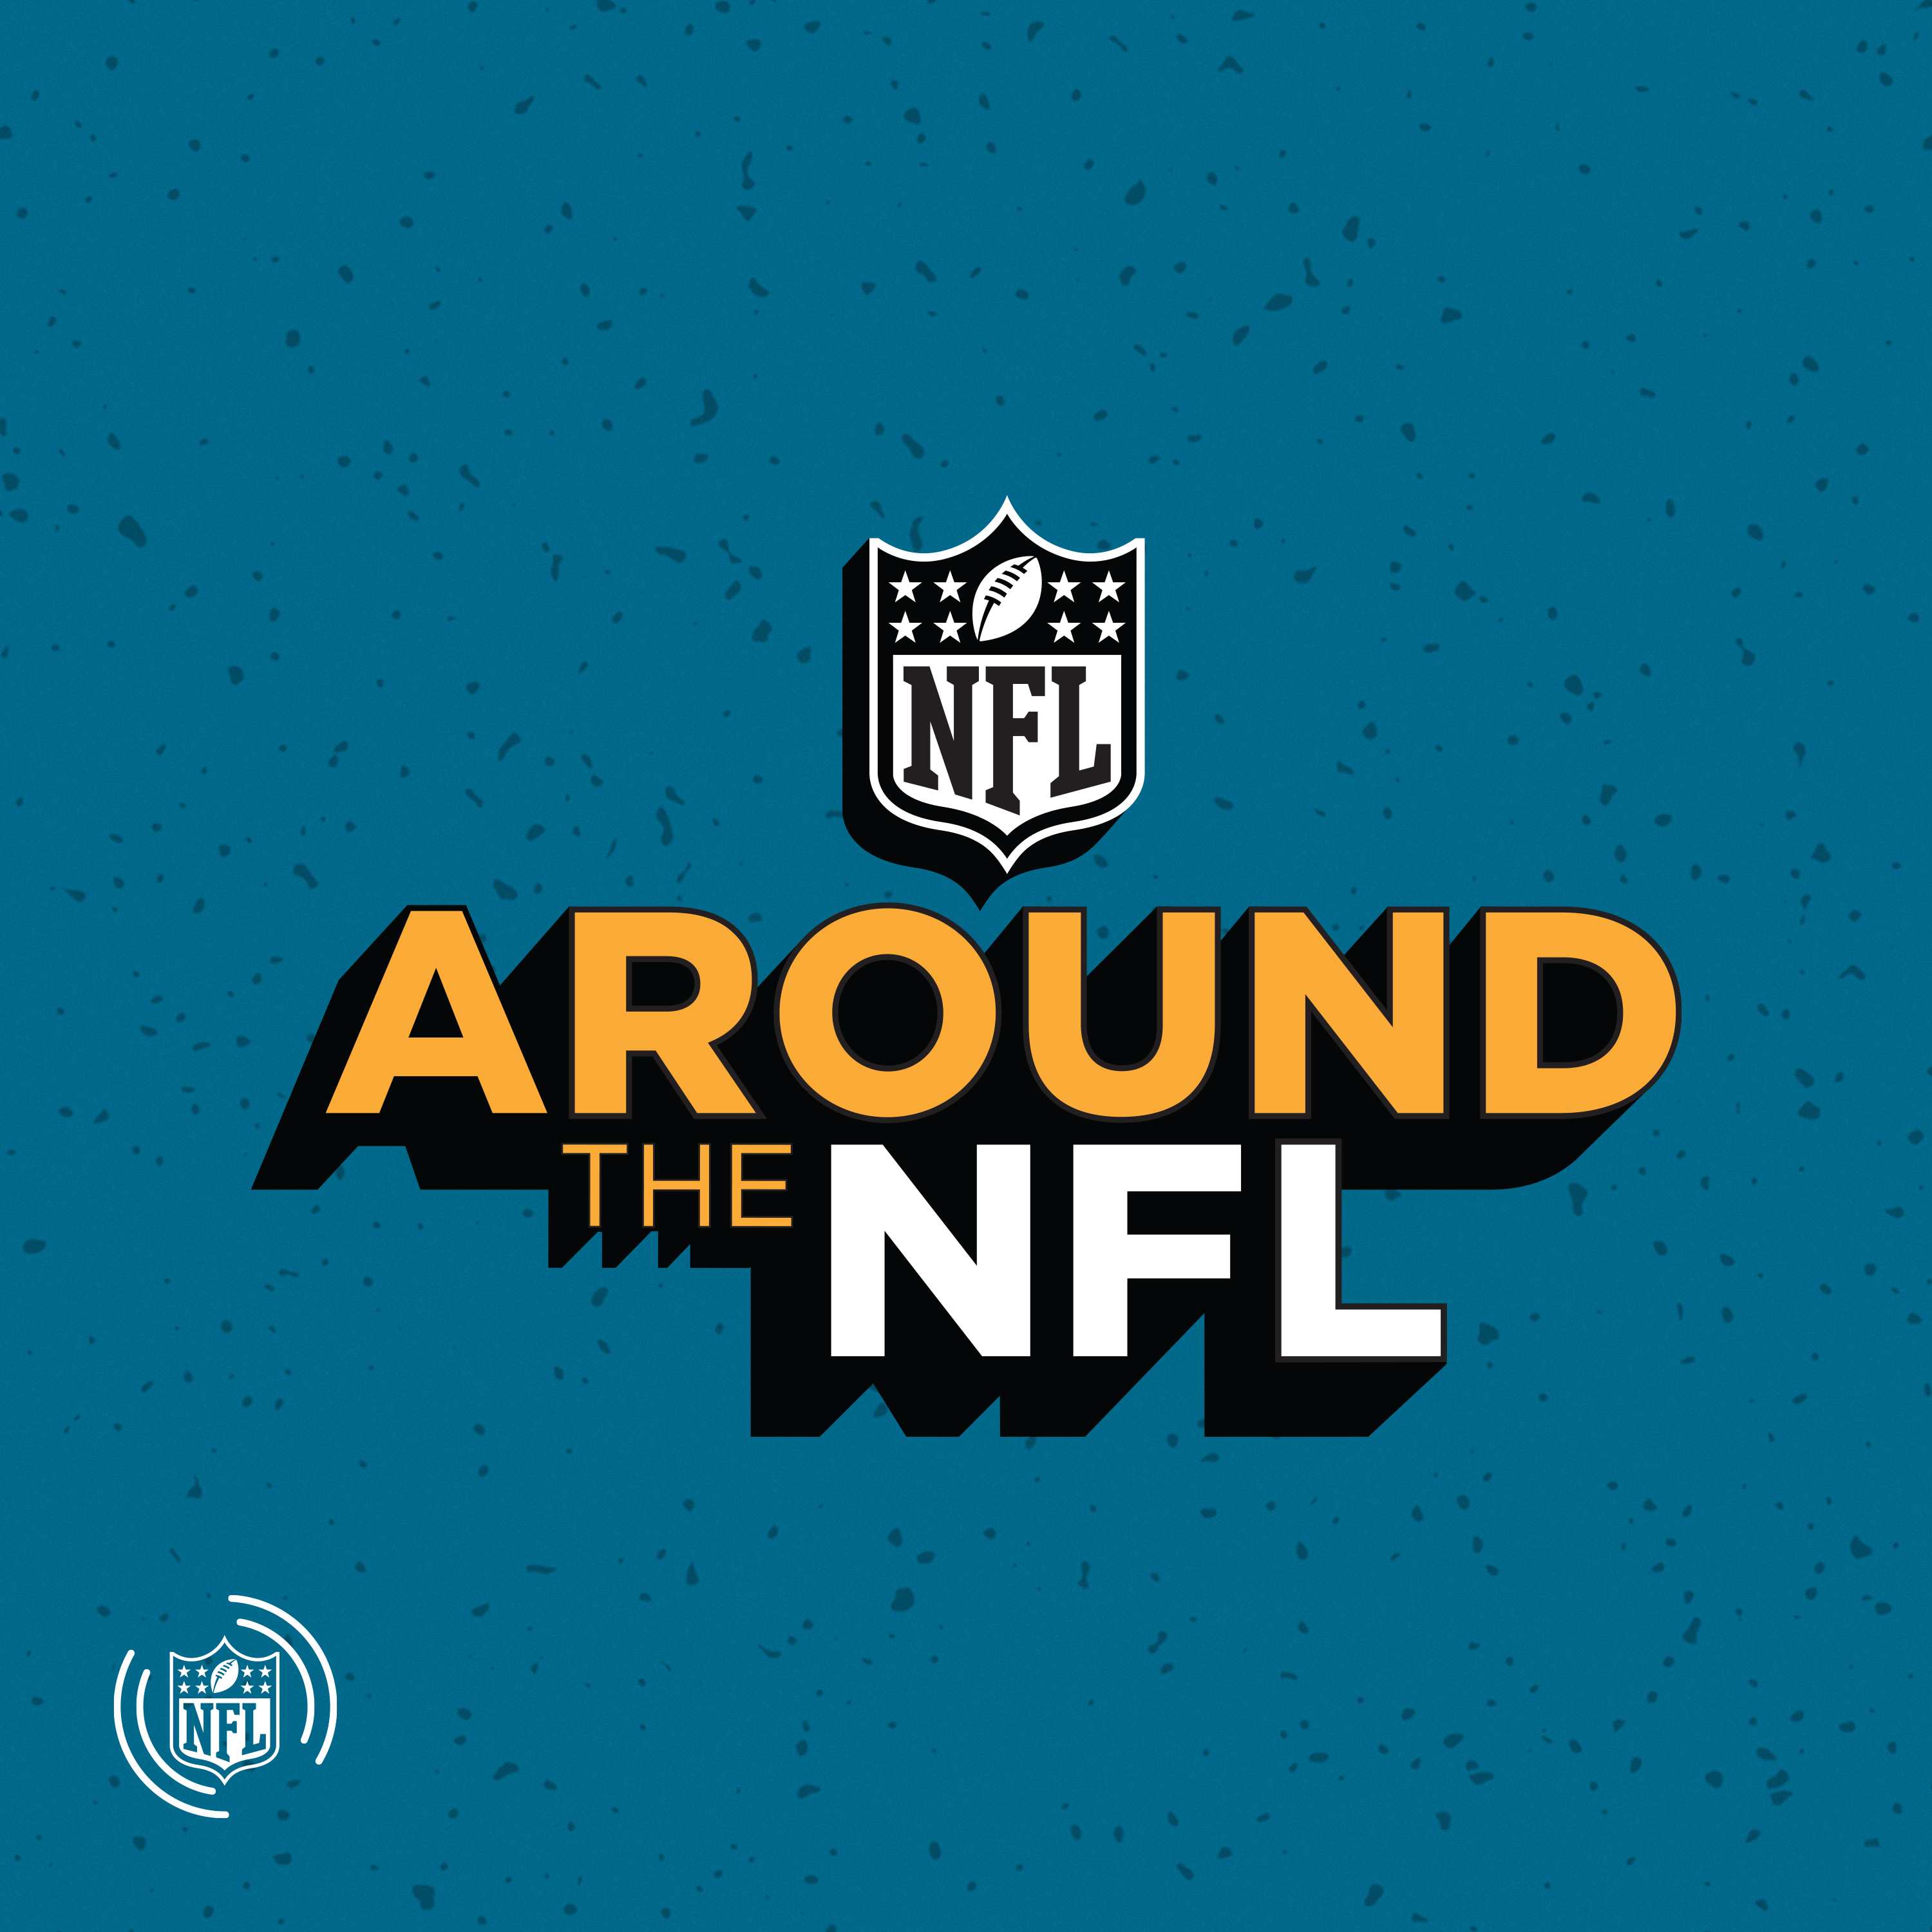 NFL ATL: Week 11 MNF recap, TNF preview